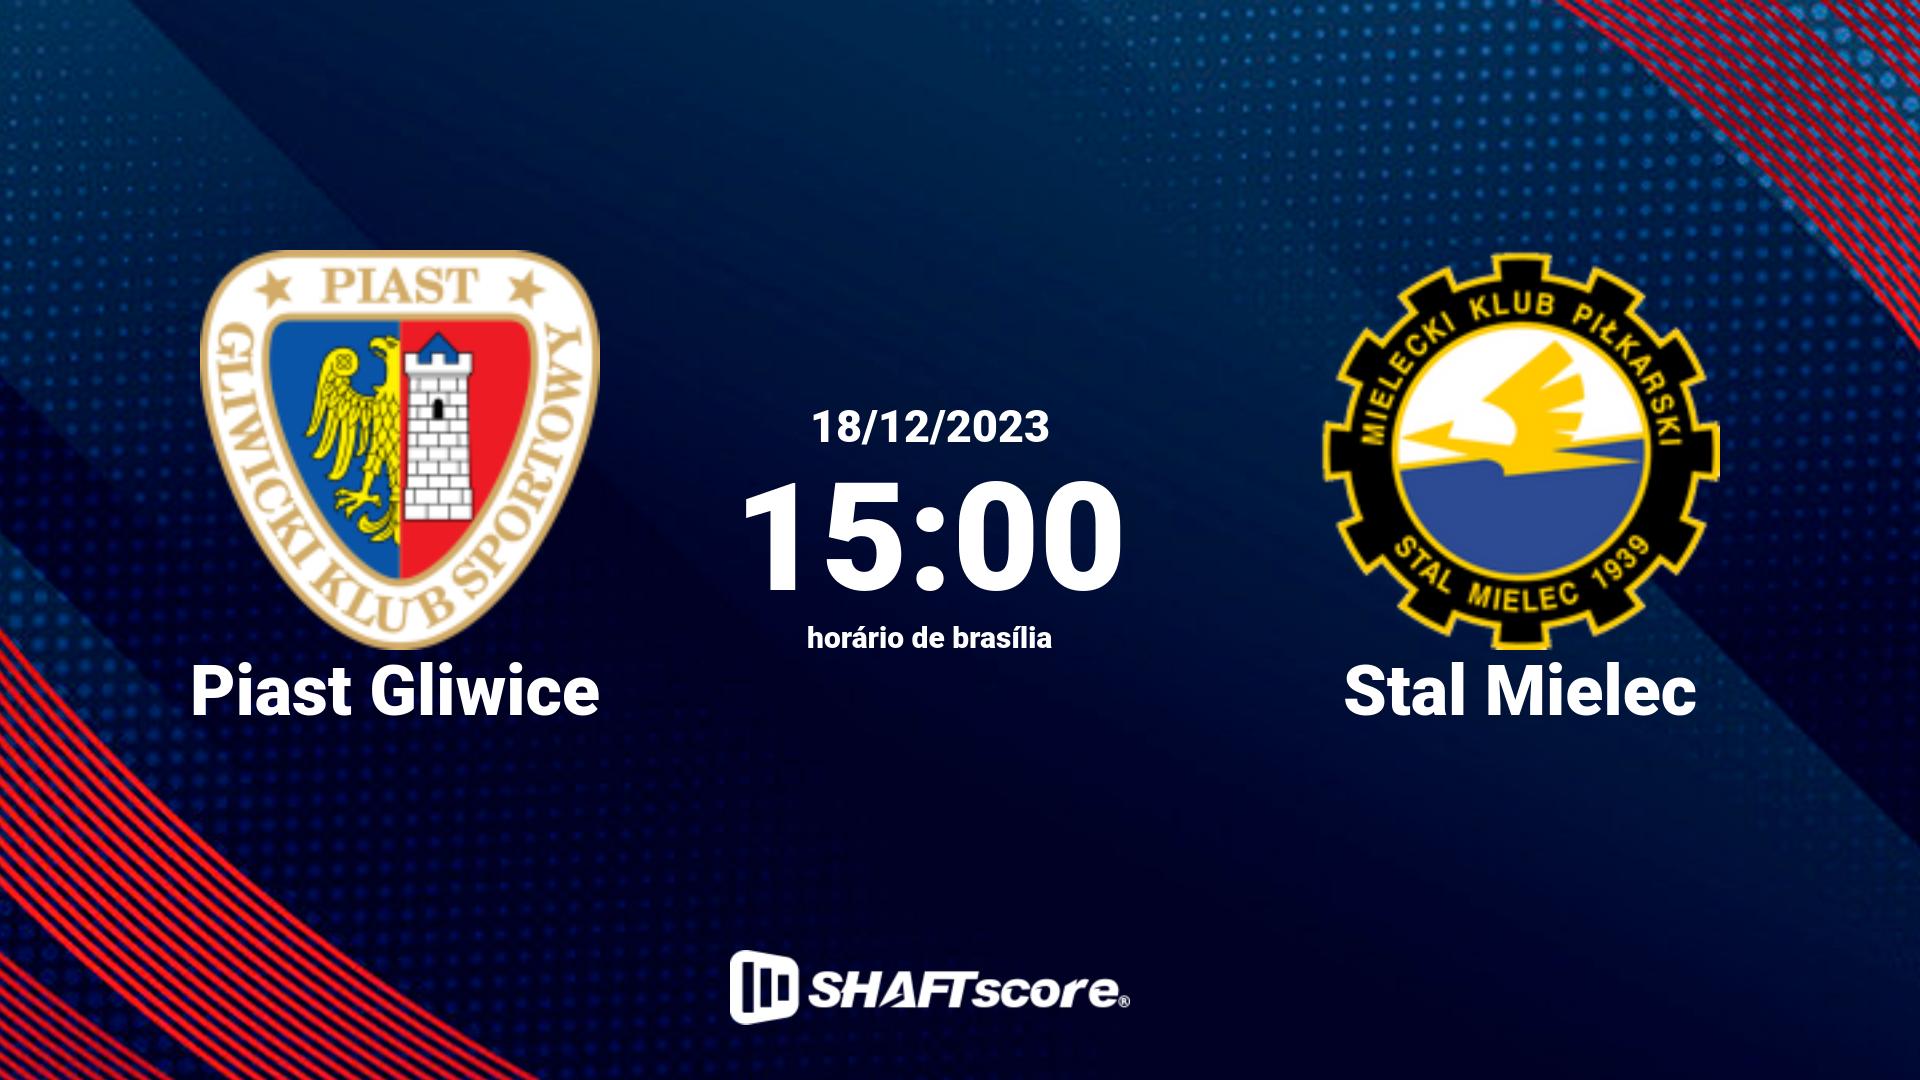 Estatísticas do jogo Piast Gliwice vs Stal Mielec 18.12 15:00